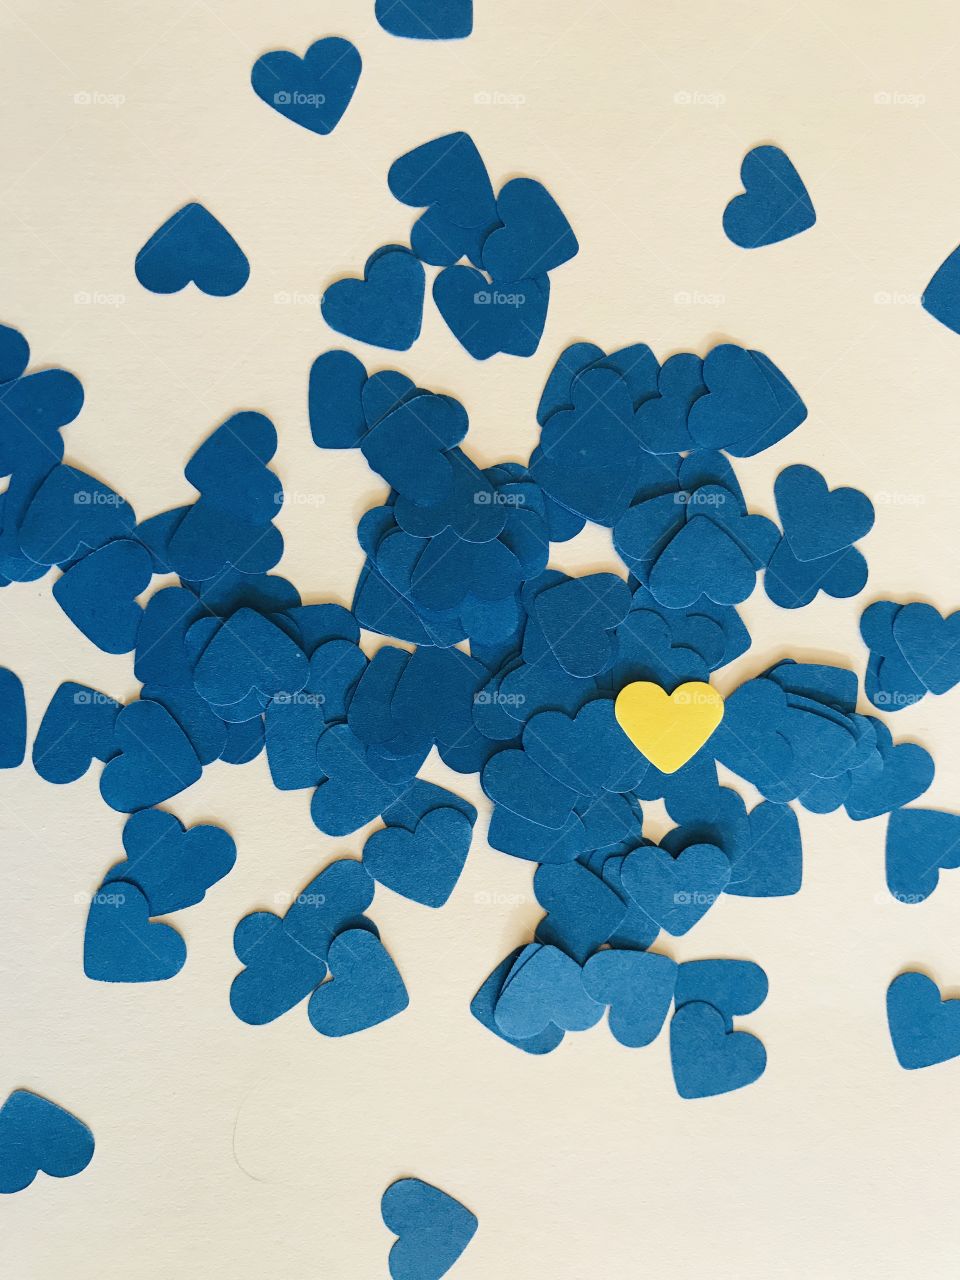 Blue paper hearts